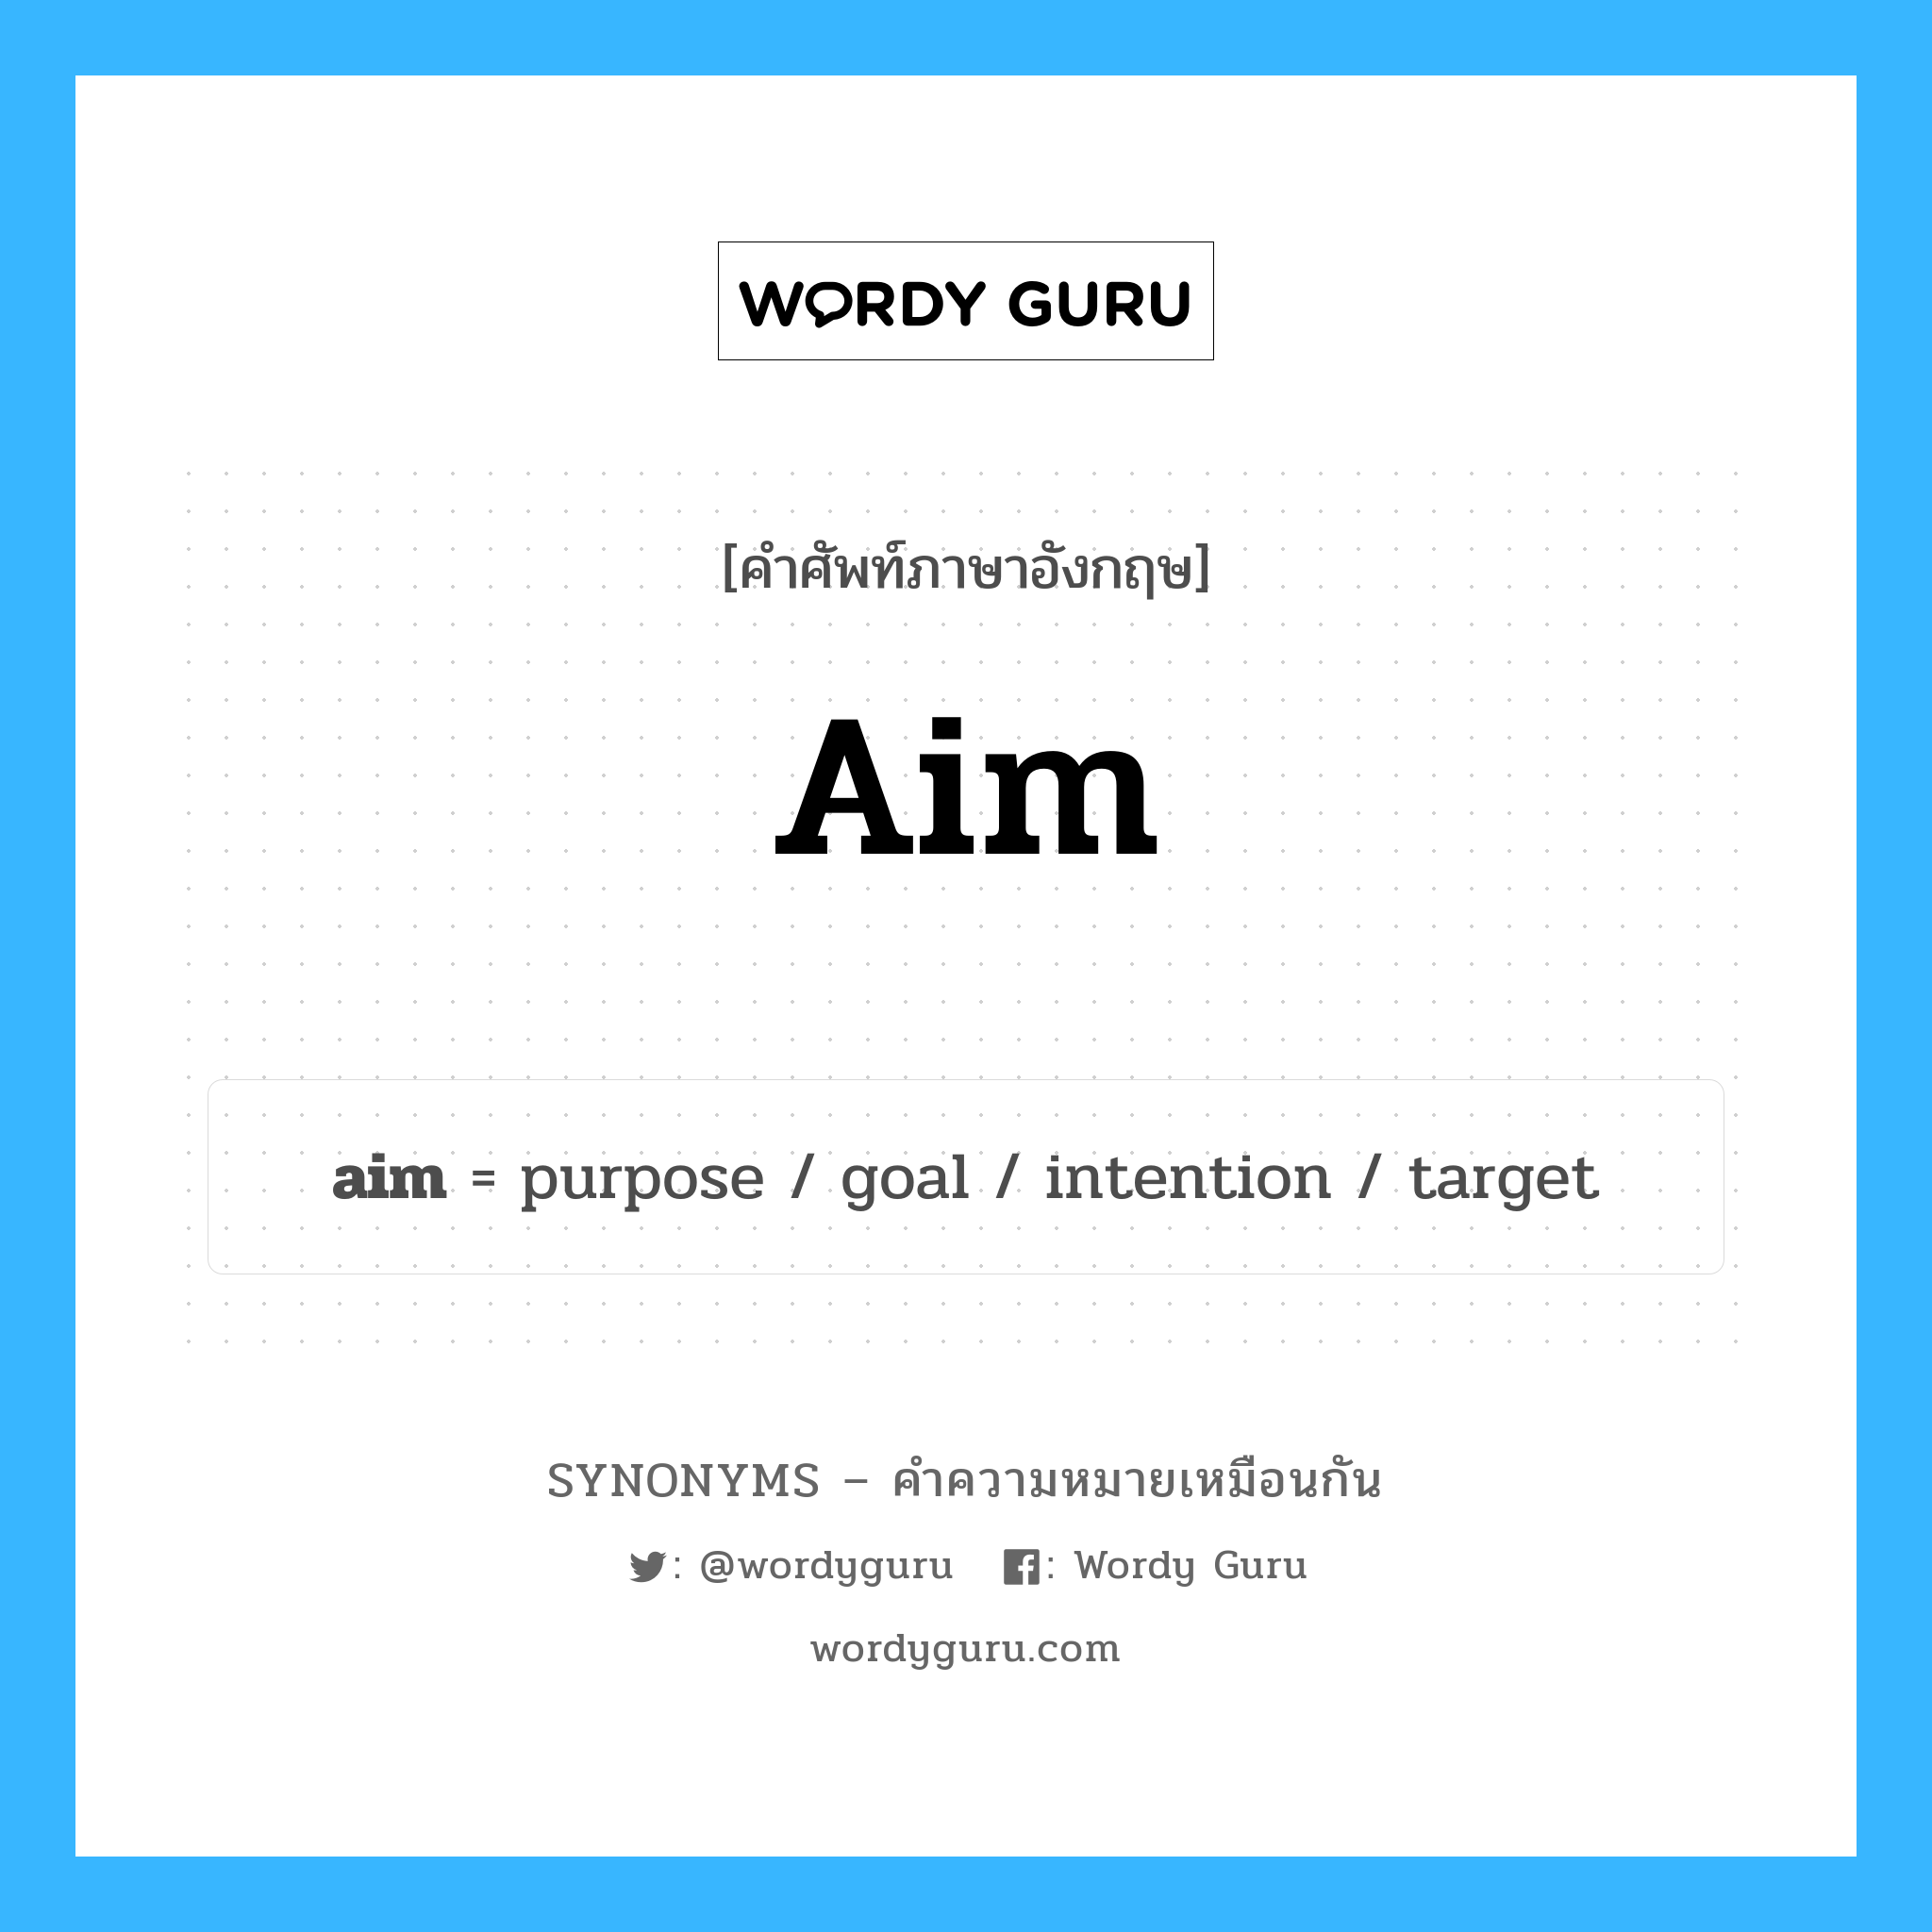 intention เป็นหนึ่งใน aim และมีคำอื่น ๆ อีกดังนี้, คำศัพท์ภาษาอังกฤษ intention ความหมายคล้ายกันกับ aim แปลว่า ความตั้งใจ หมวด aim